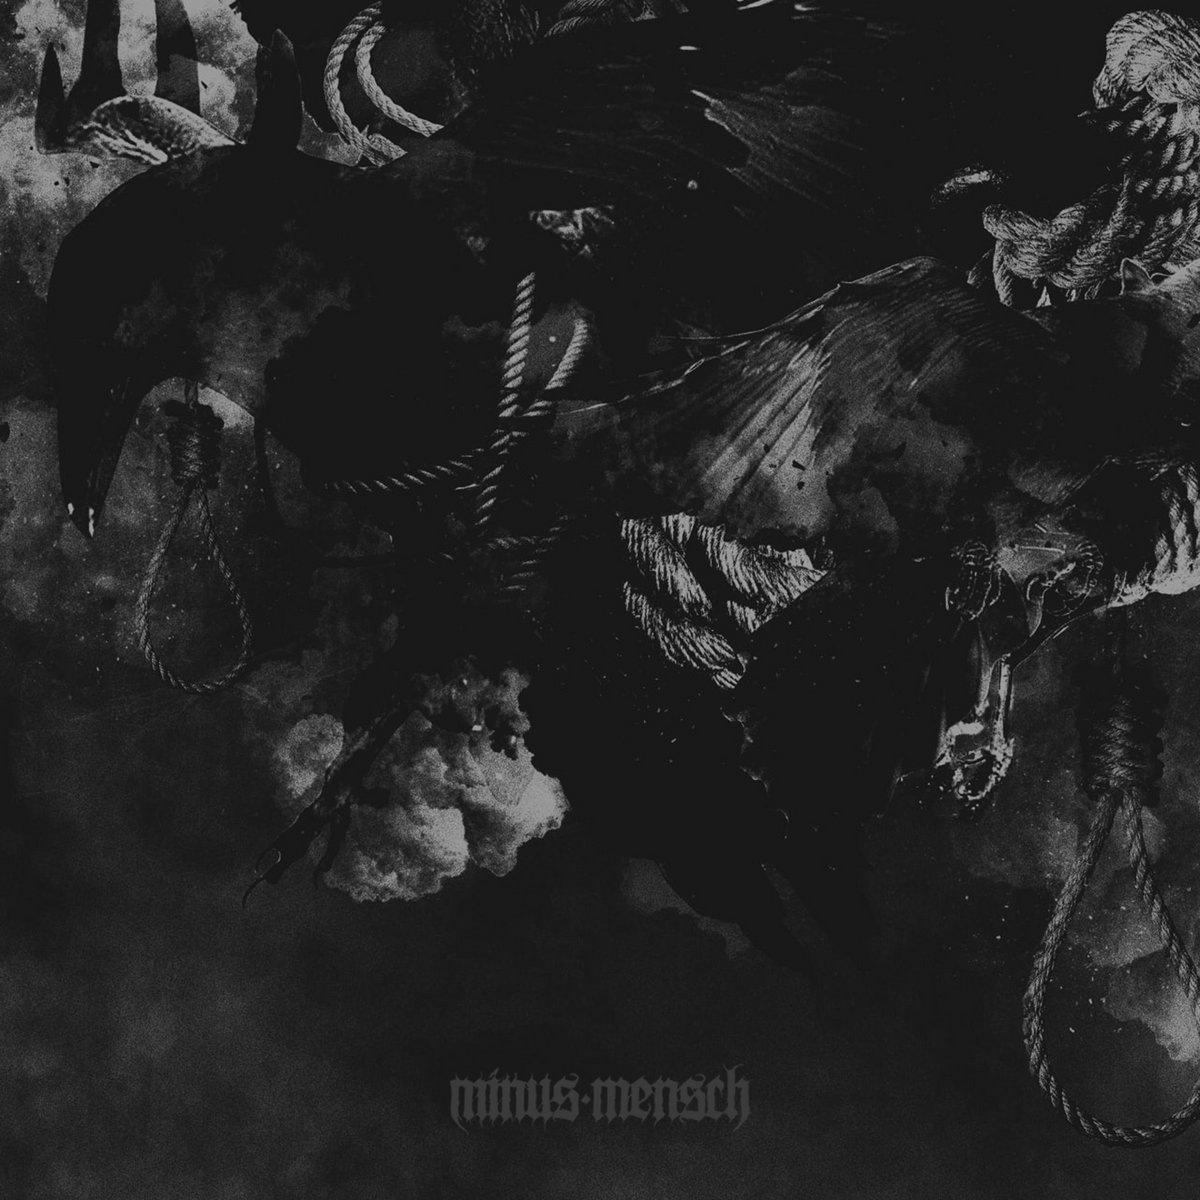 minus mensch - artwork by Mordor 